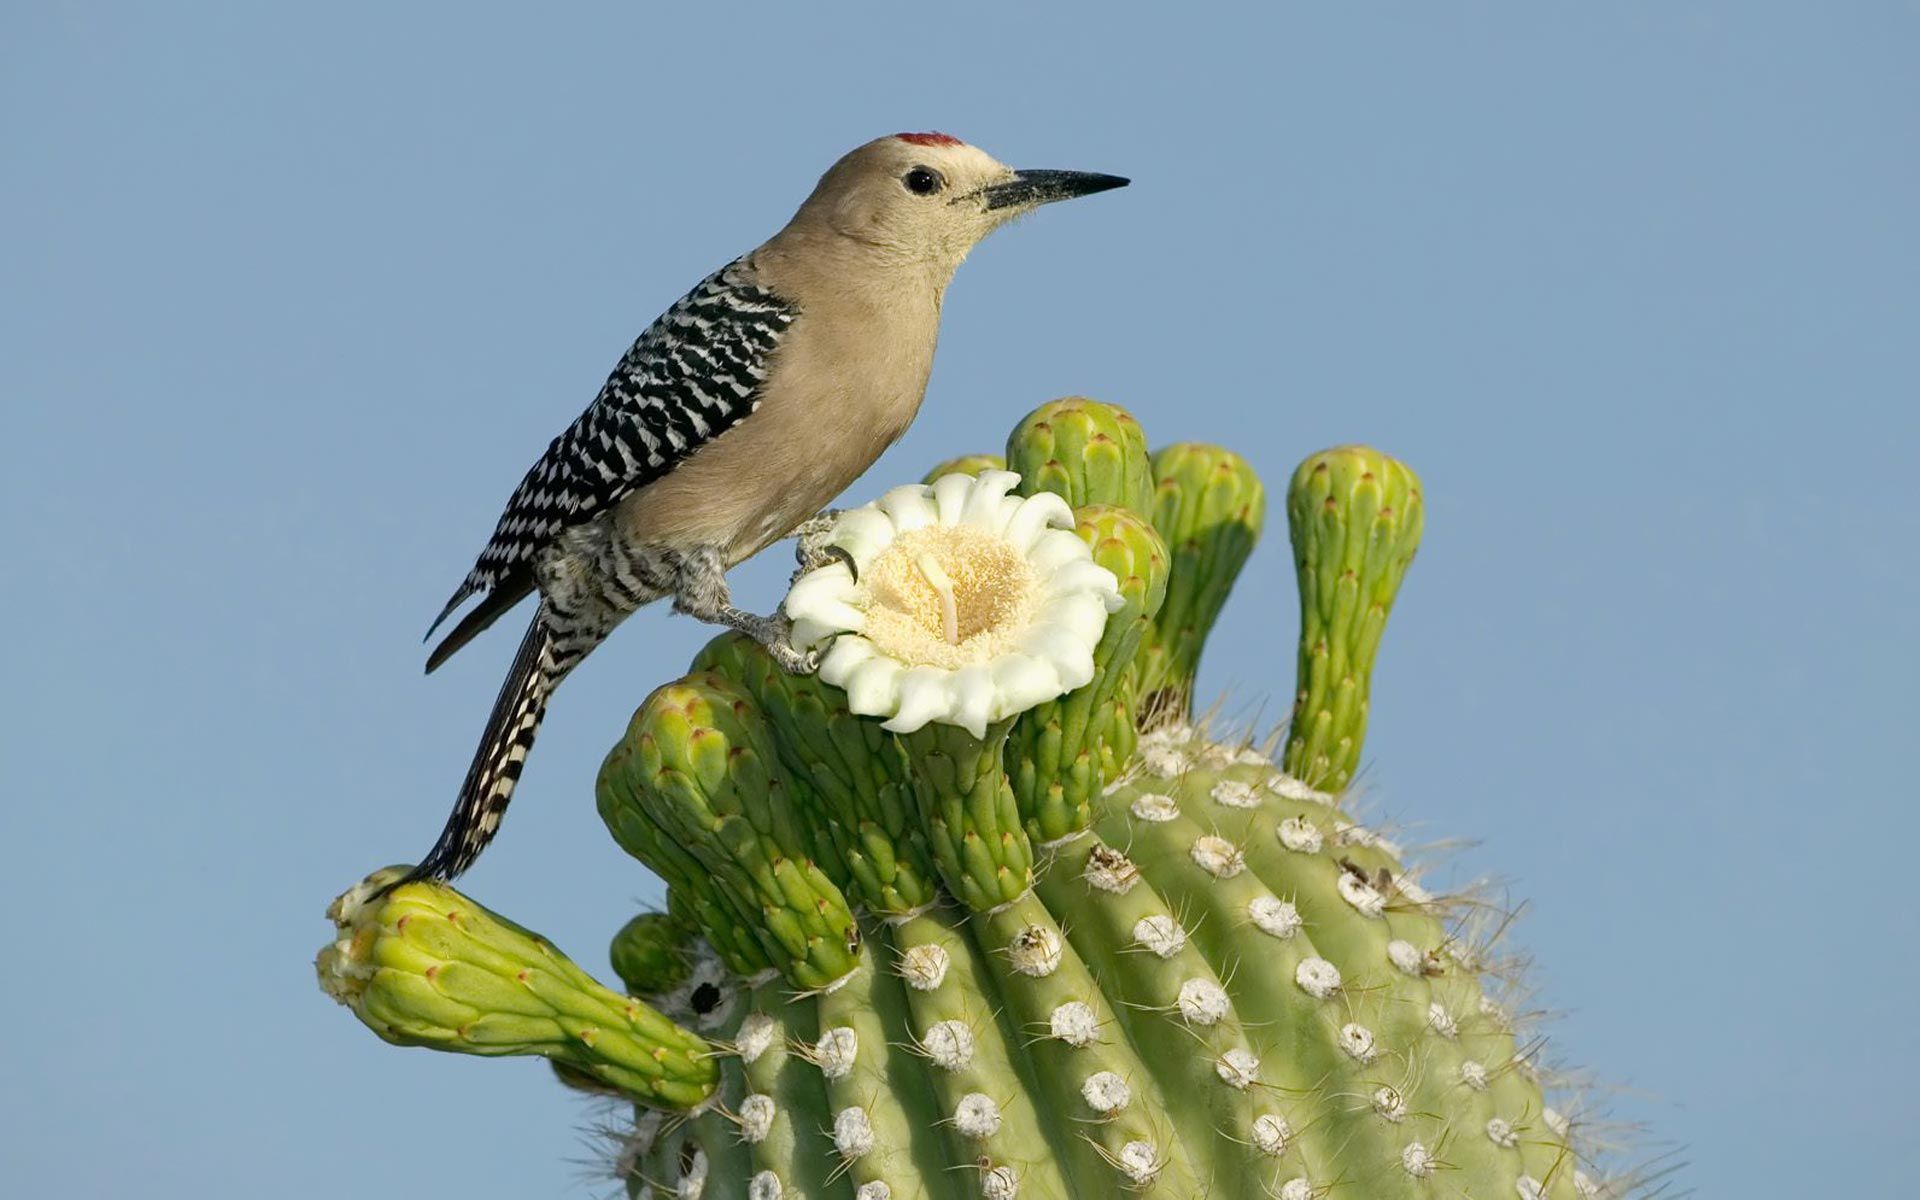 Cactus Wren-the Arizona State bird | The Great Southwest | Pinterest ...